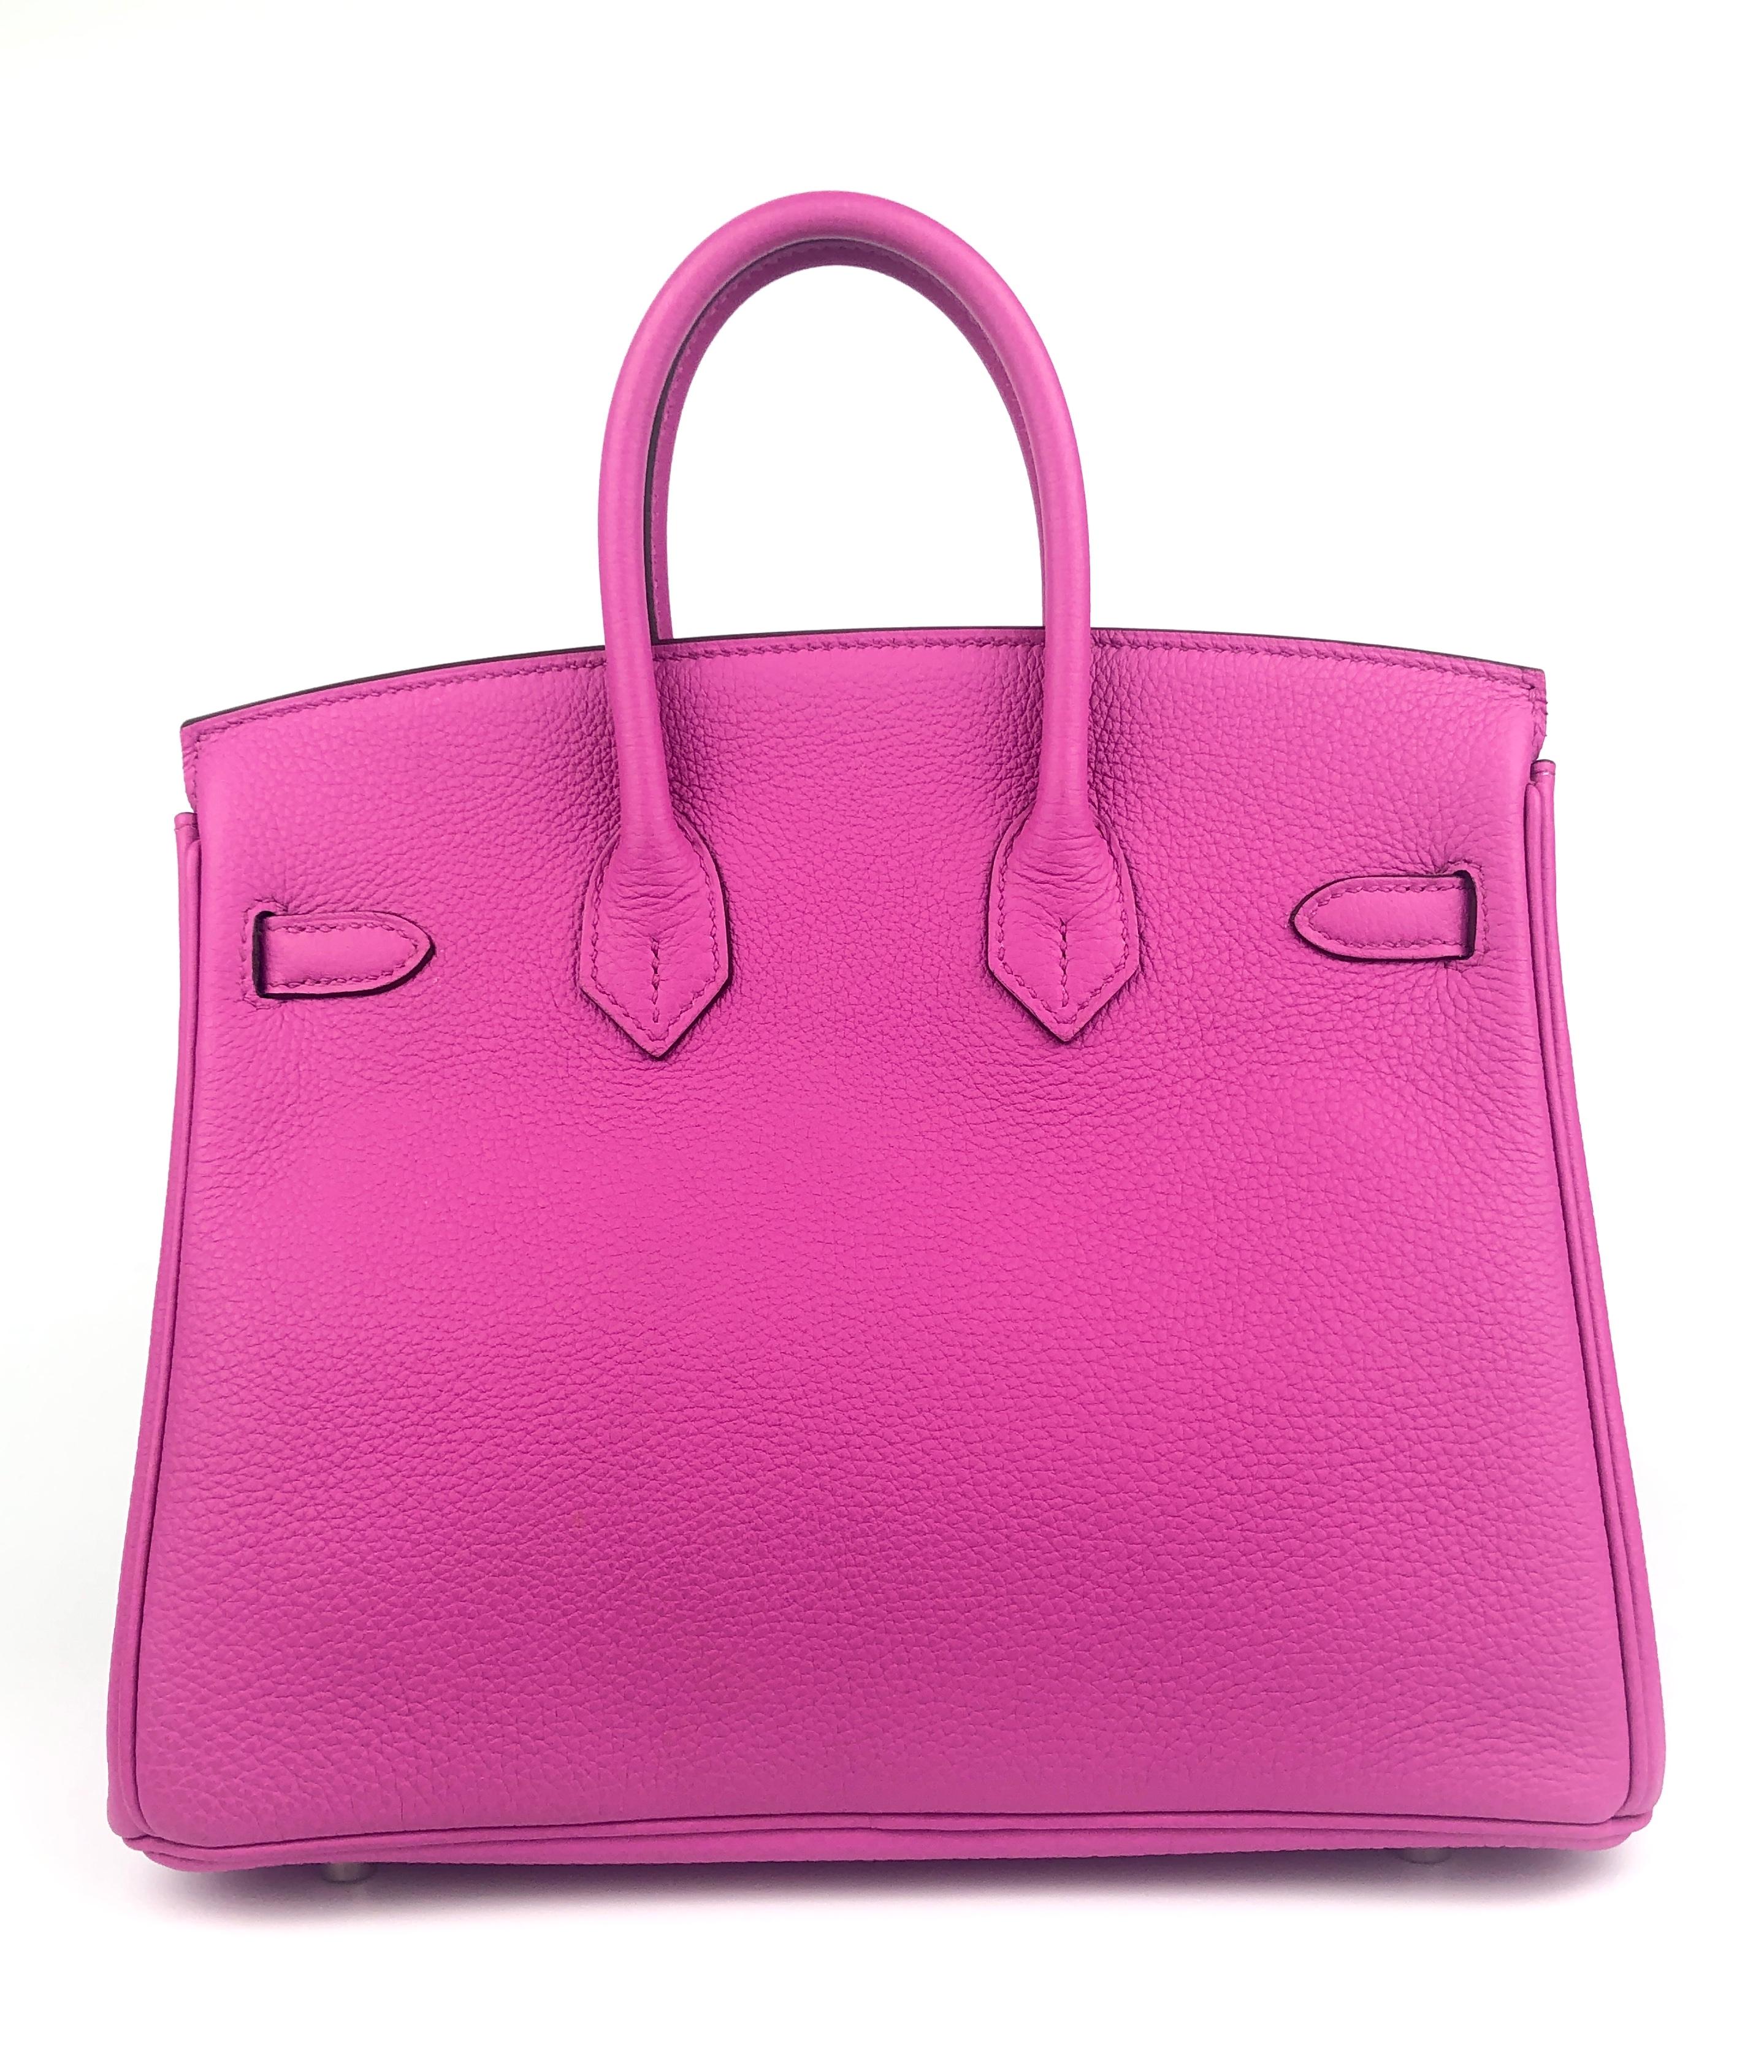 Hermes Birkin 25 Magnolia Pink Purple Togo Leather Palladium Hardware In Excellent Condition For Sale In Miami, FL